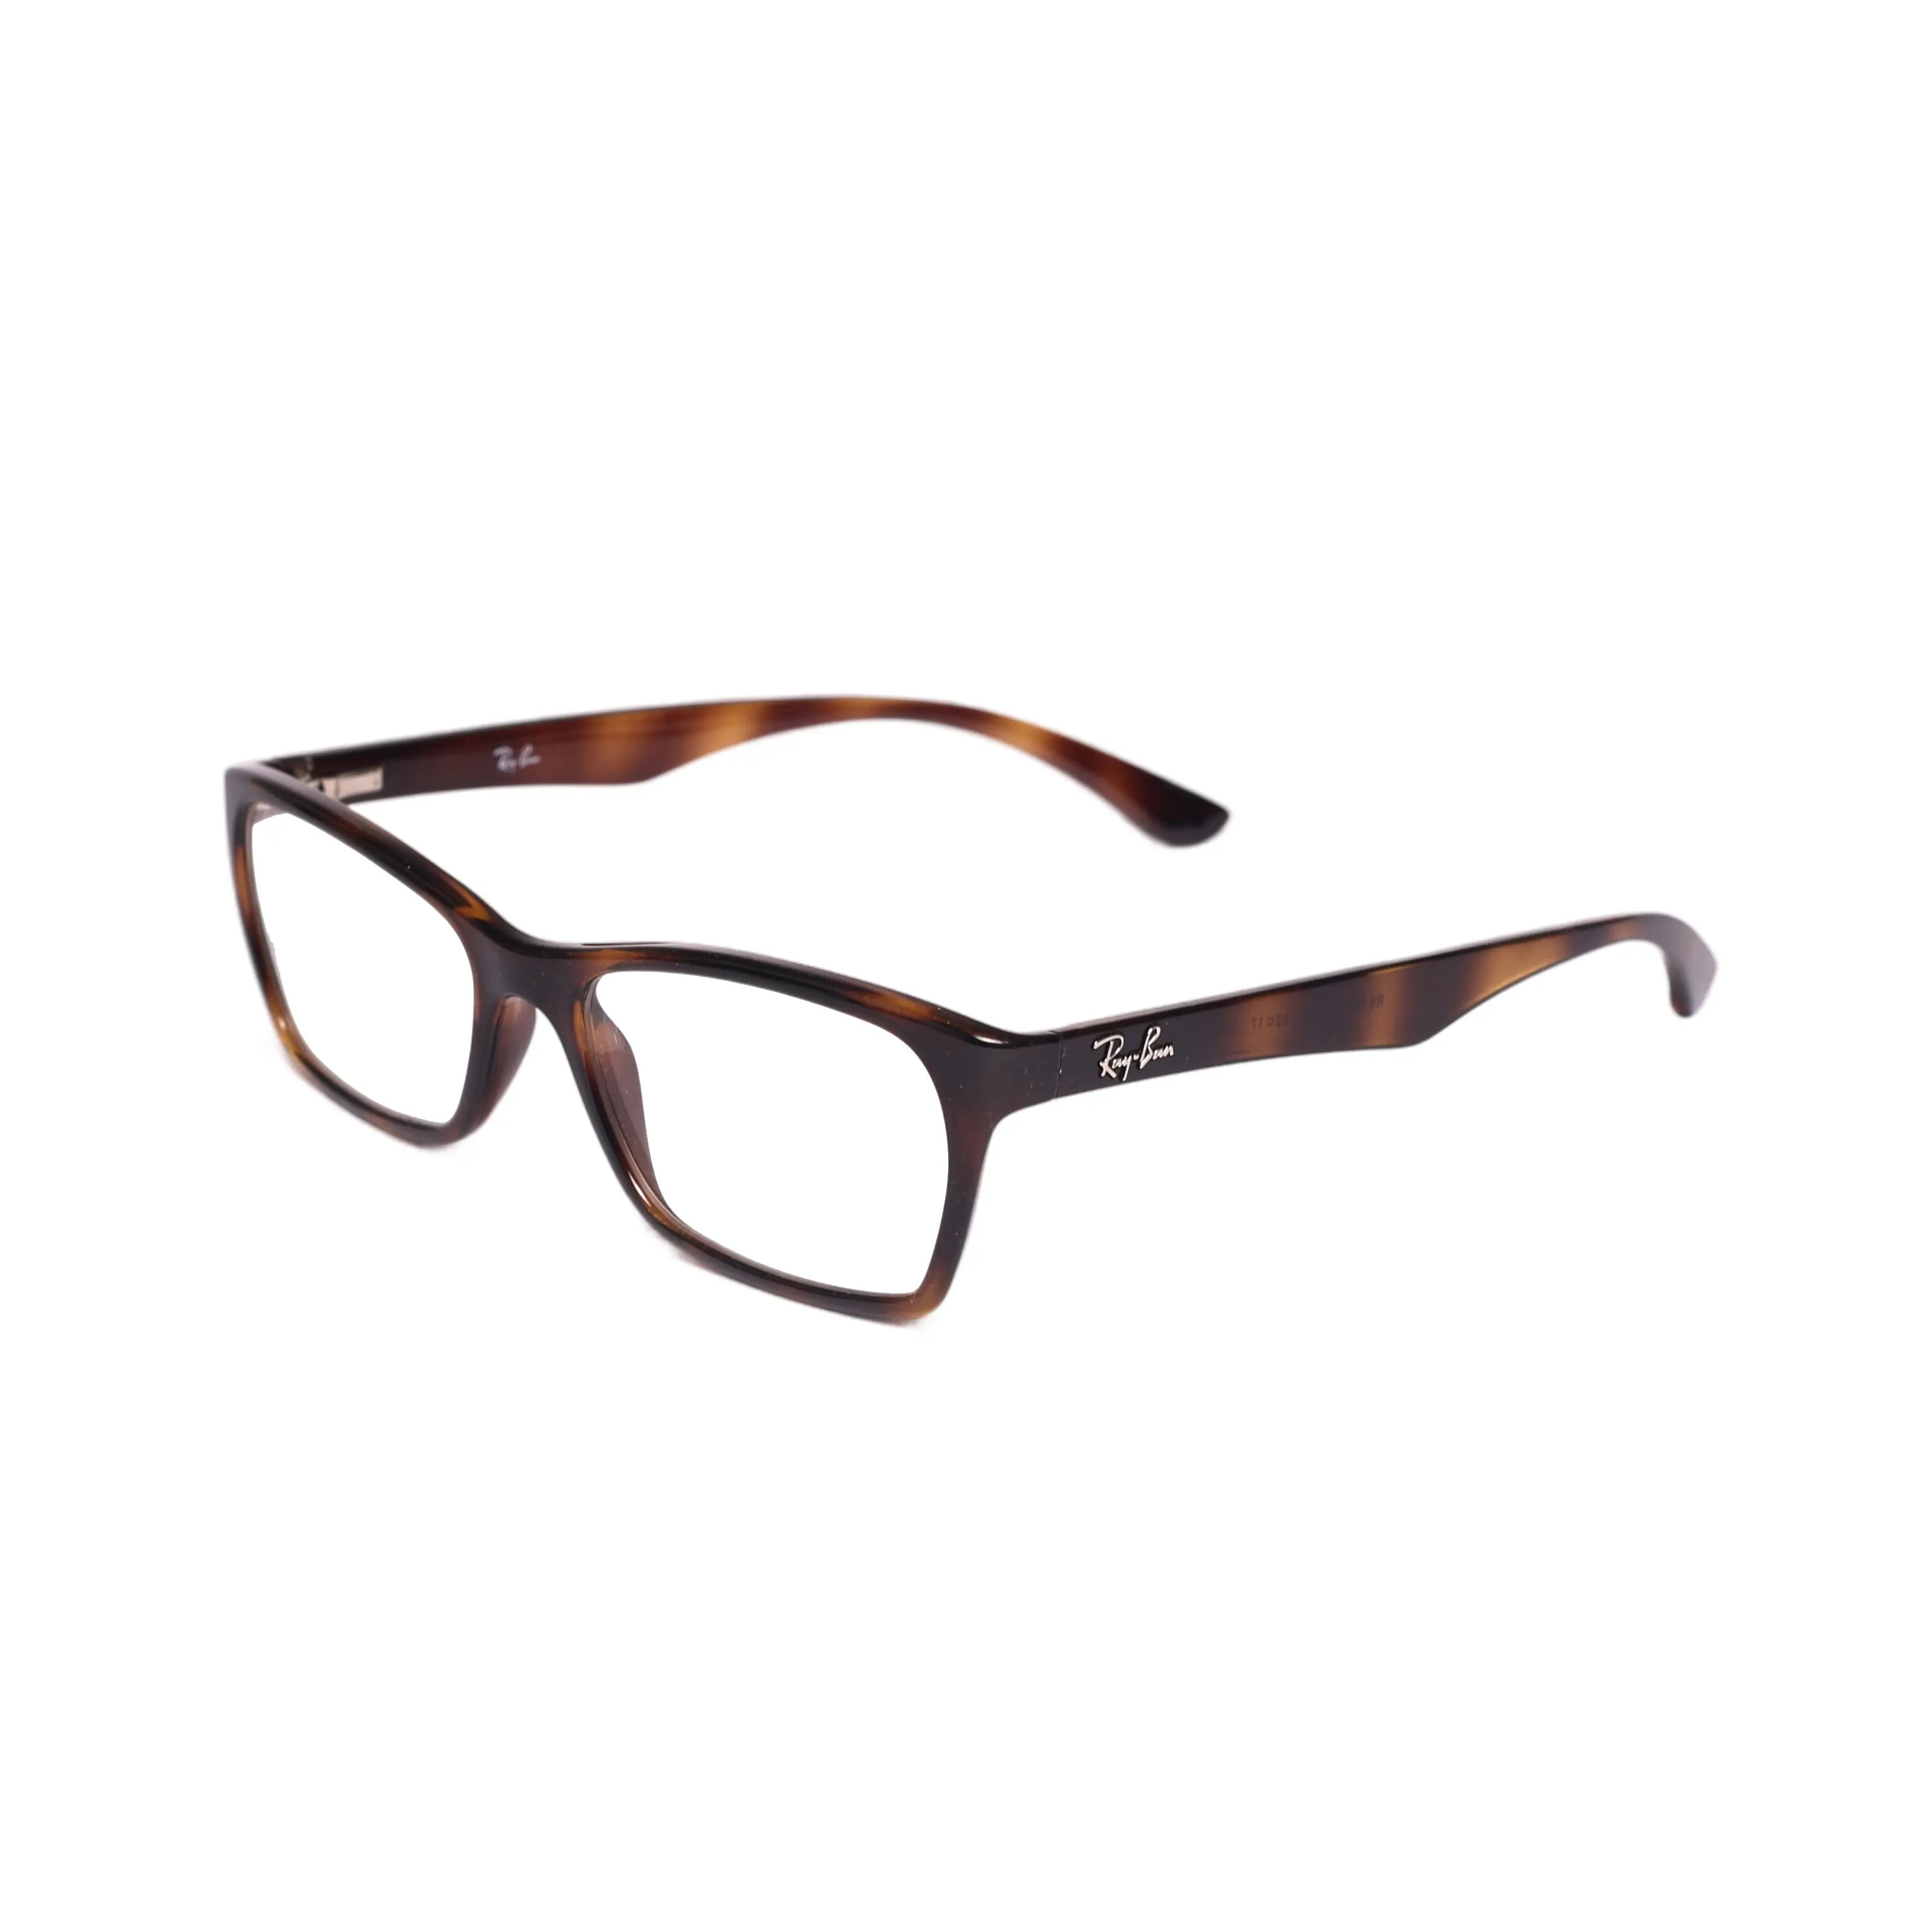 Rayban-RX7033I-52-2012 Eyeglasses - Premium Eyeglasses from Rayban - Just Rs. 5190! Shop now at Laxmi Opticians